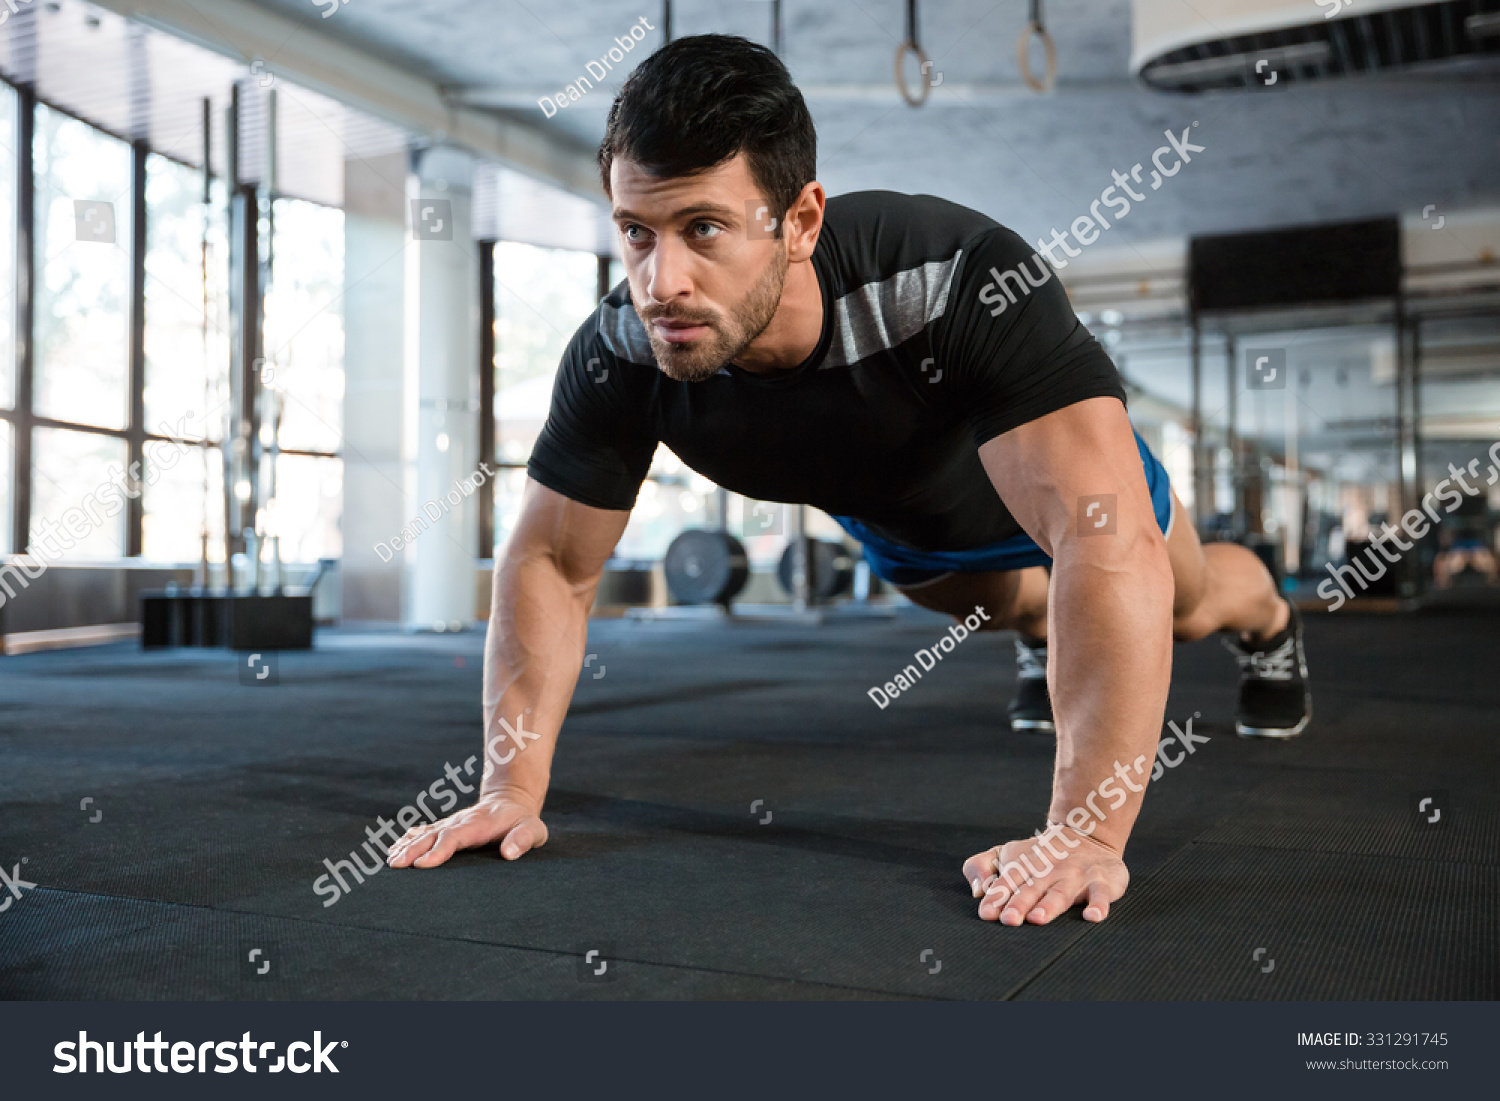 Sportsman wearing blue shorts and black t-shirt doing push-ups #331291745